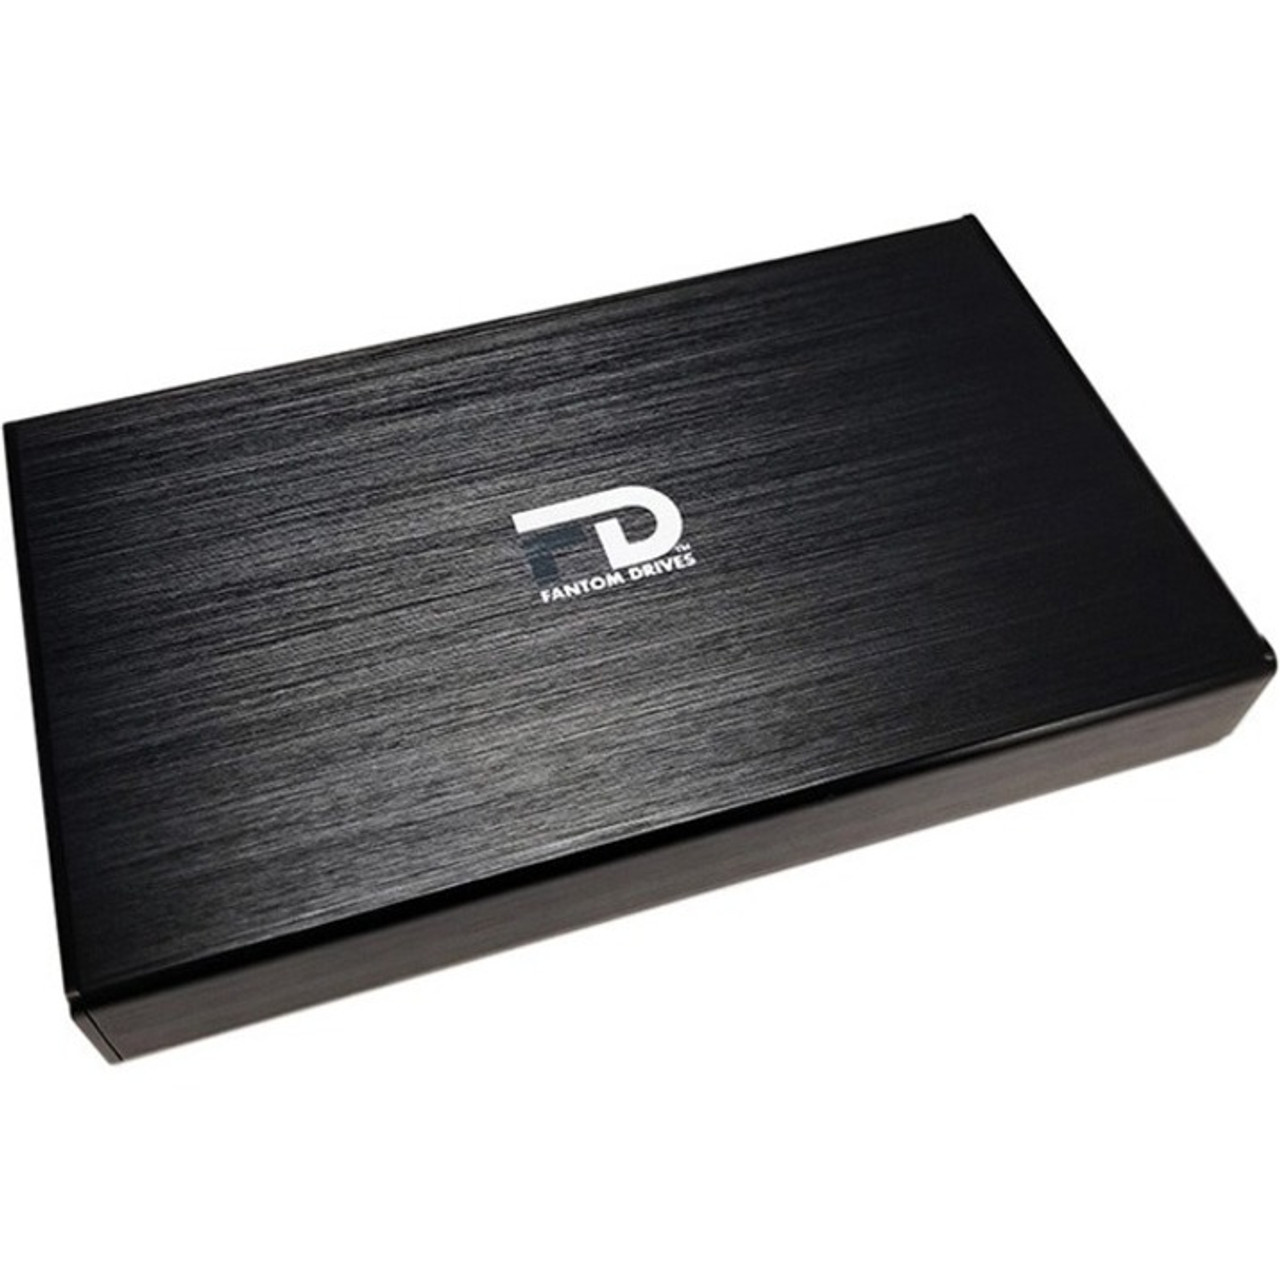 Fantom Drives FD 5TB Xbox Portable Hard Drive - USB 3.2 Gen 1 - 5Gbps - Aluminum - Black